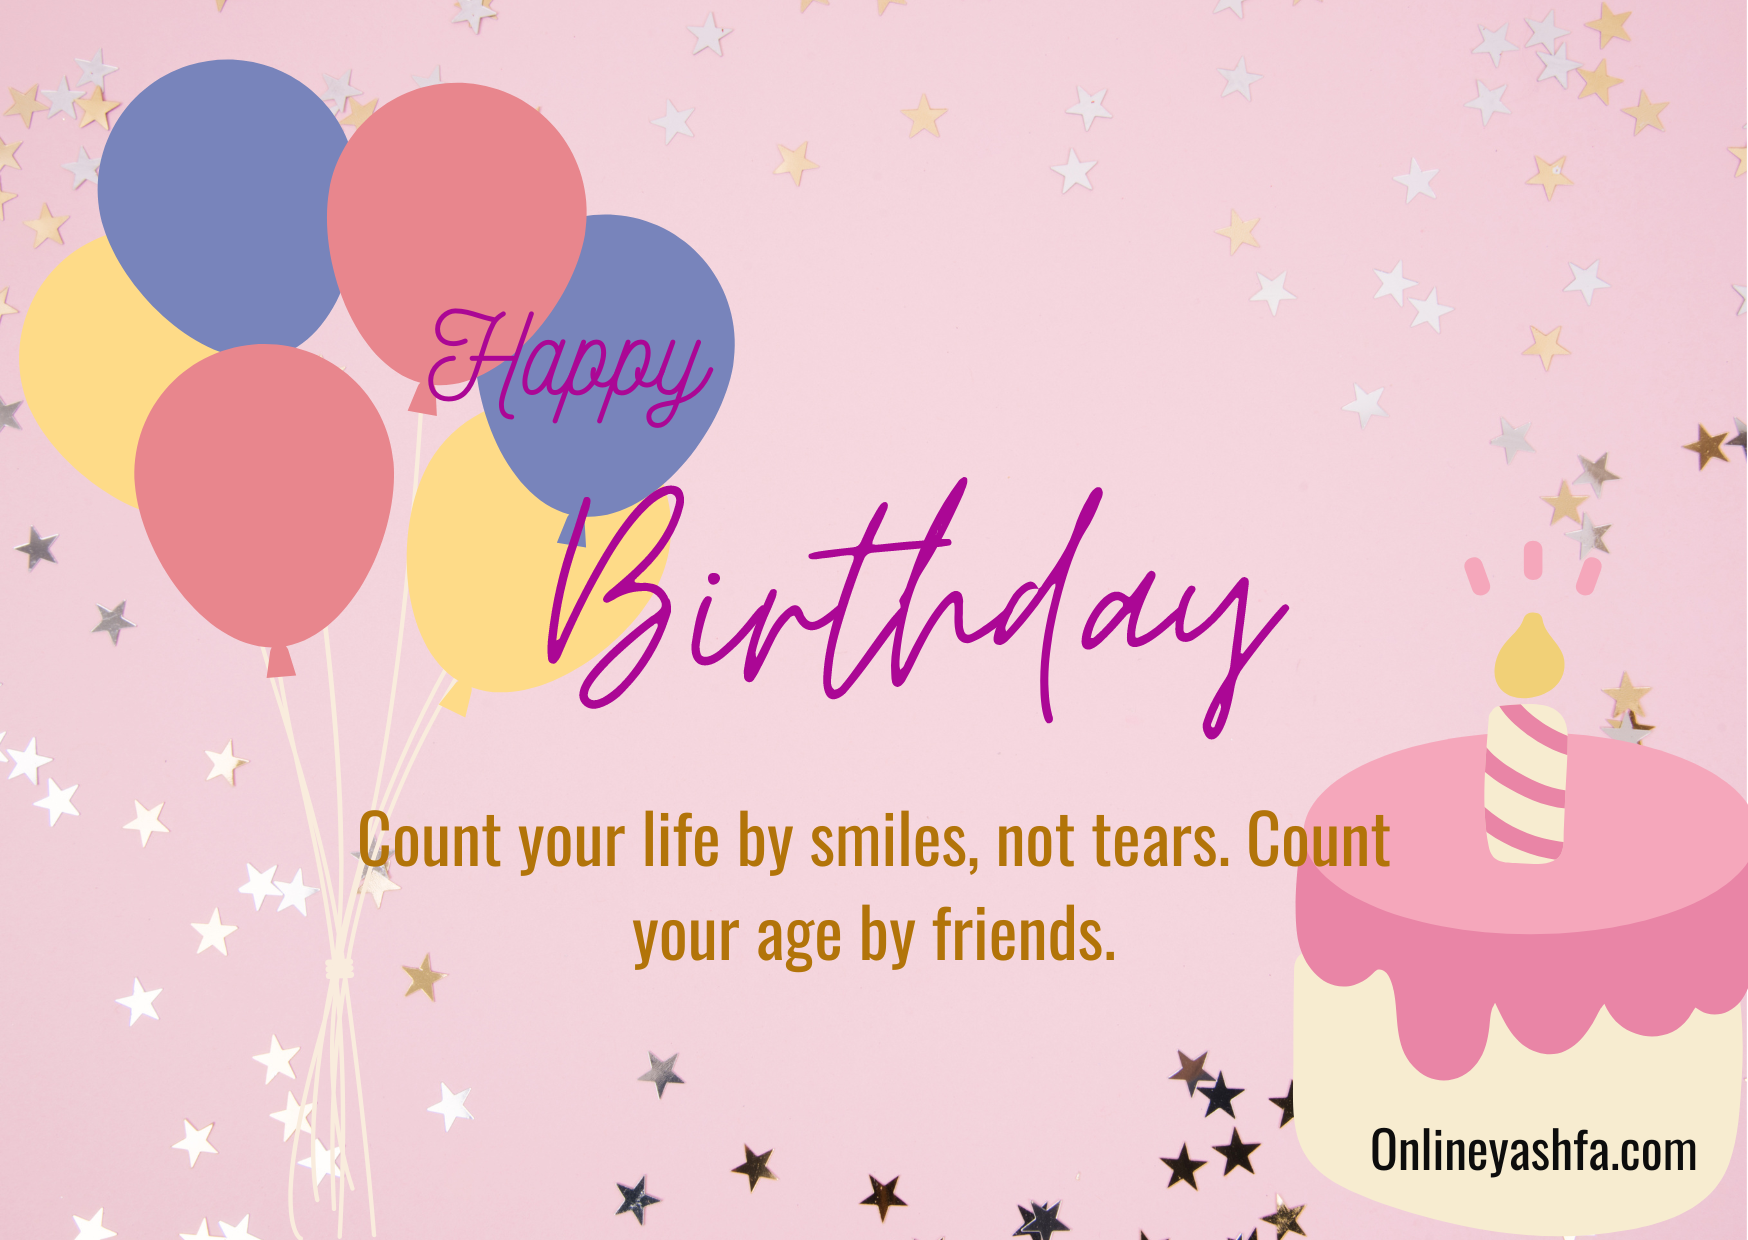 100+Best Happy Birthday wishes for friend 2023 - Online Yashfa